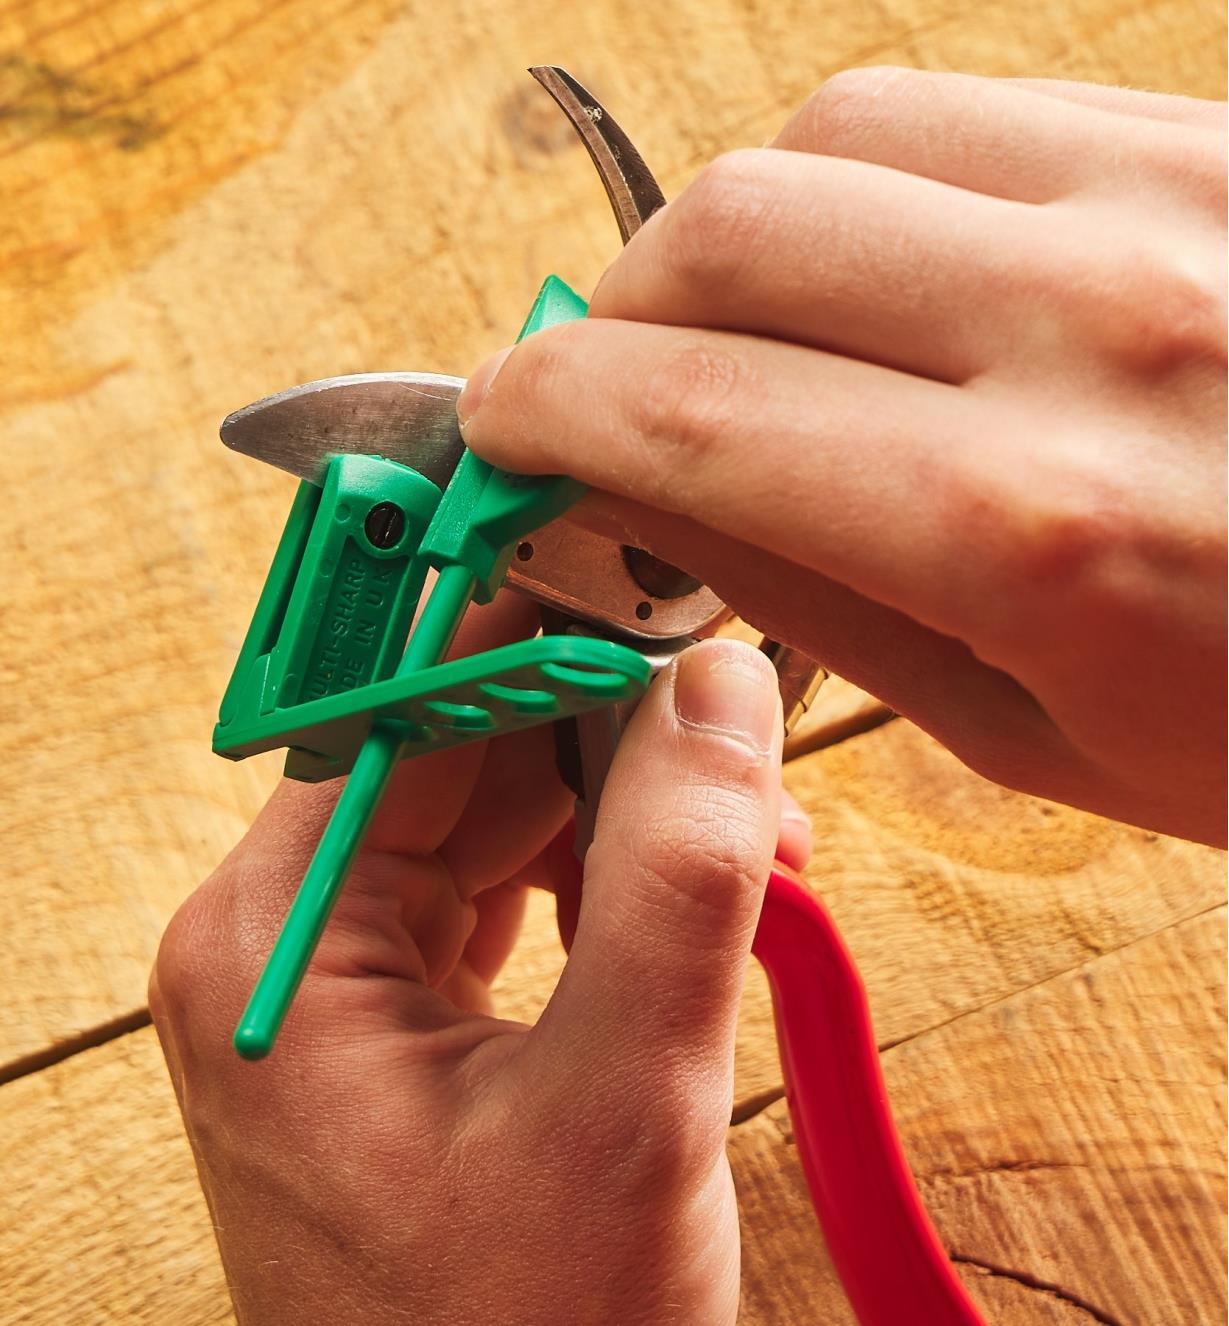 Pruner Sharpener being used to sharpen a hand pruner blade